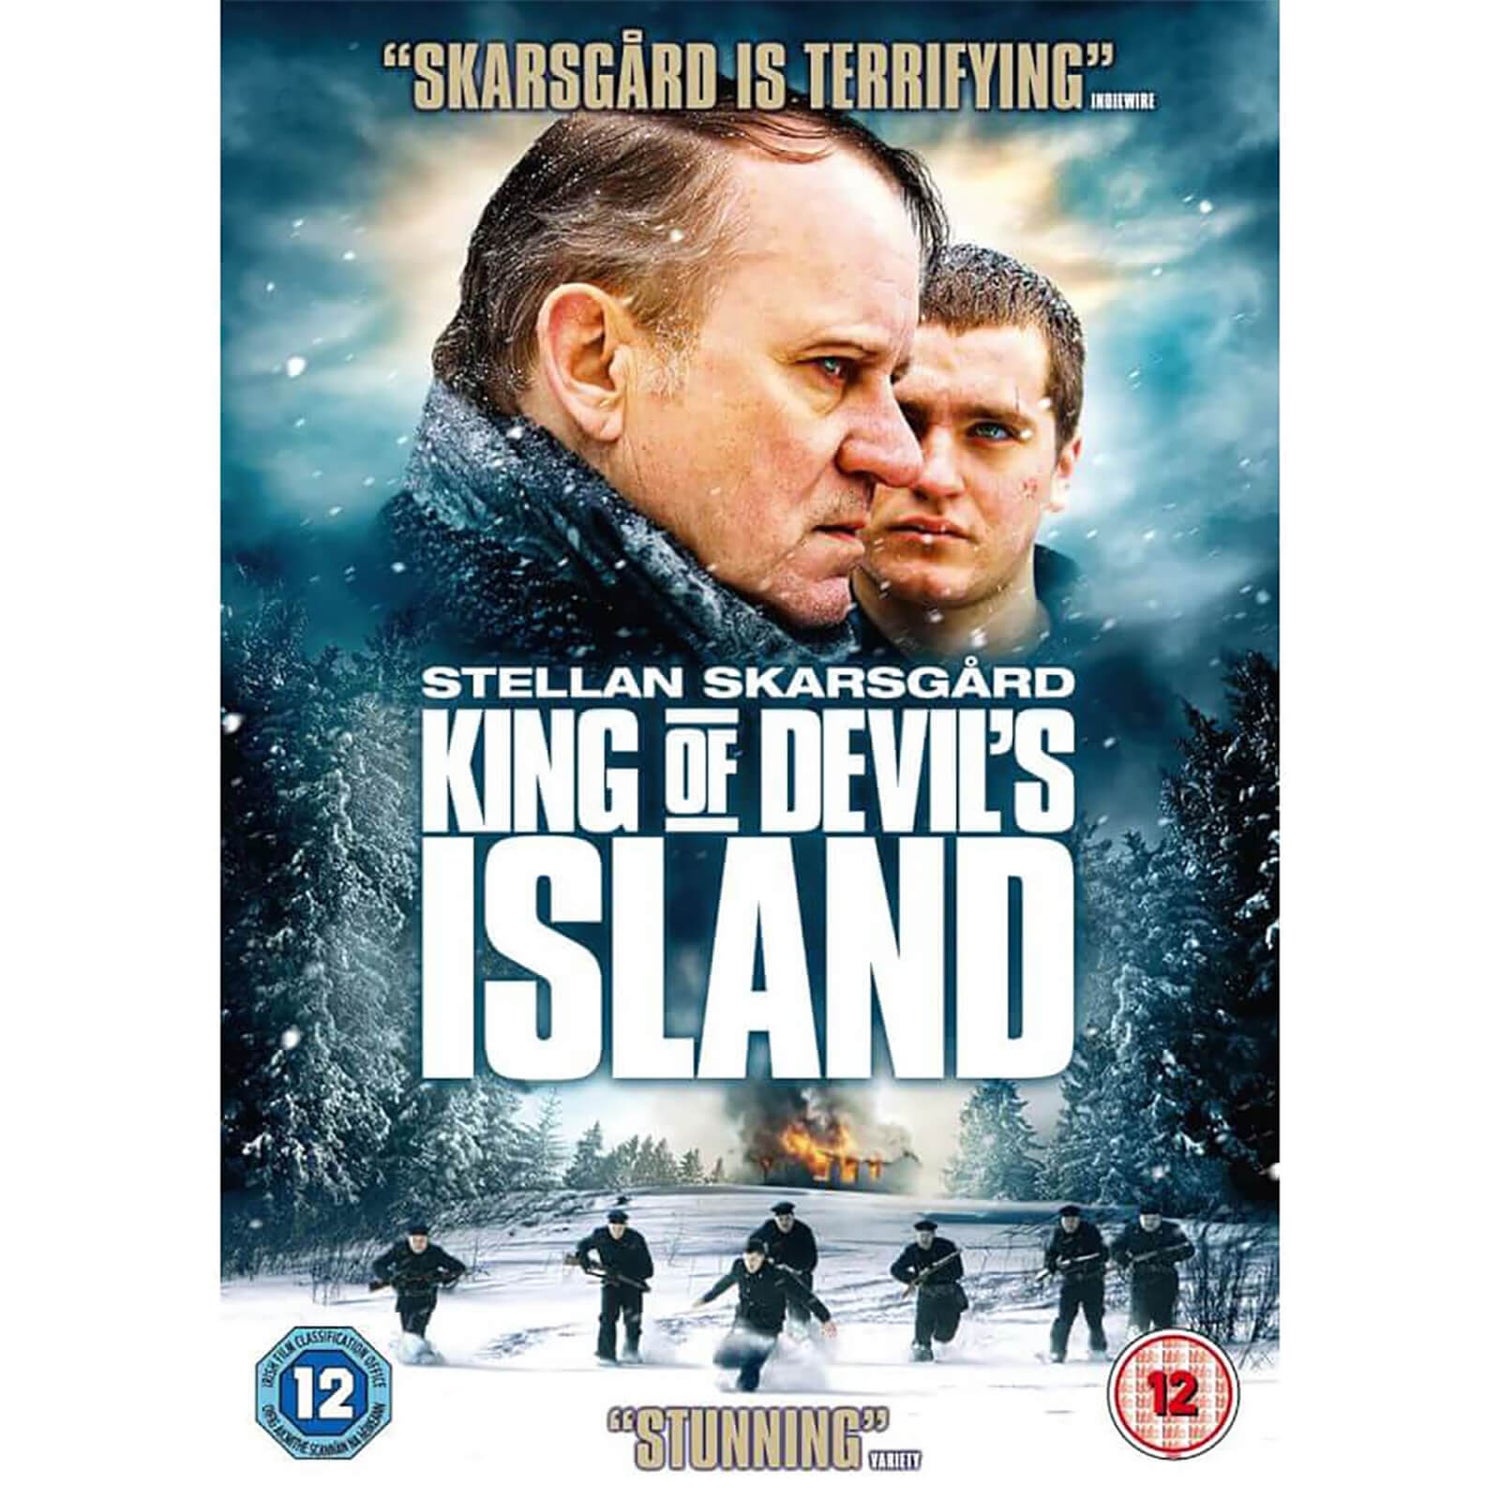 King of Devils Island